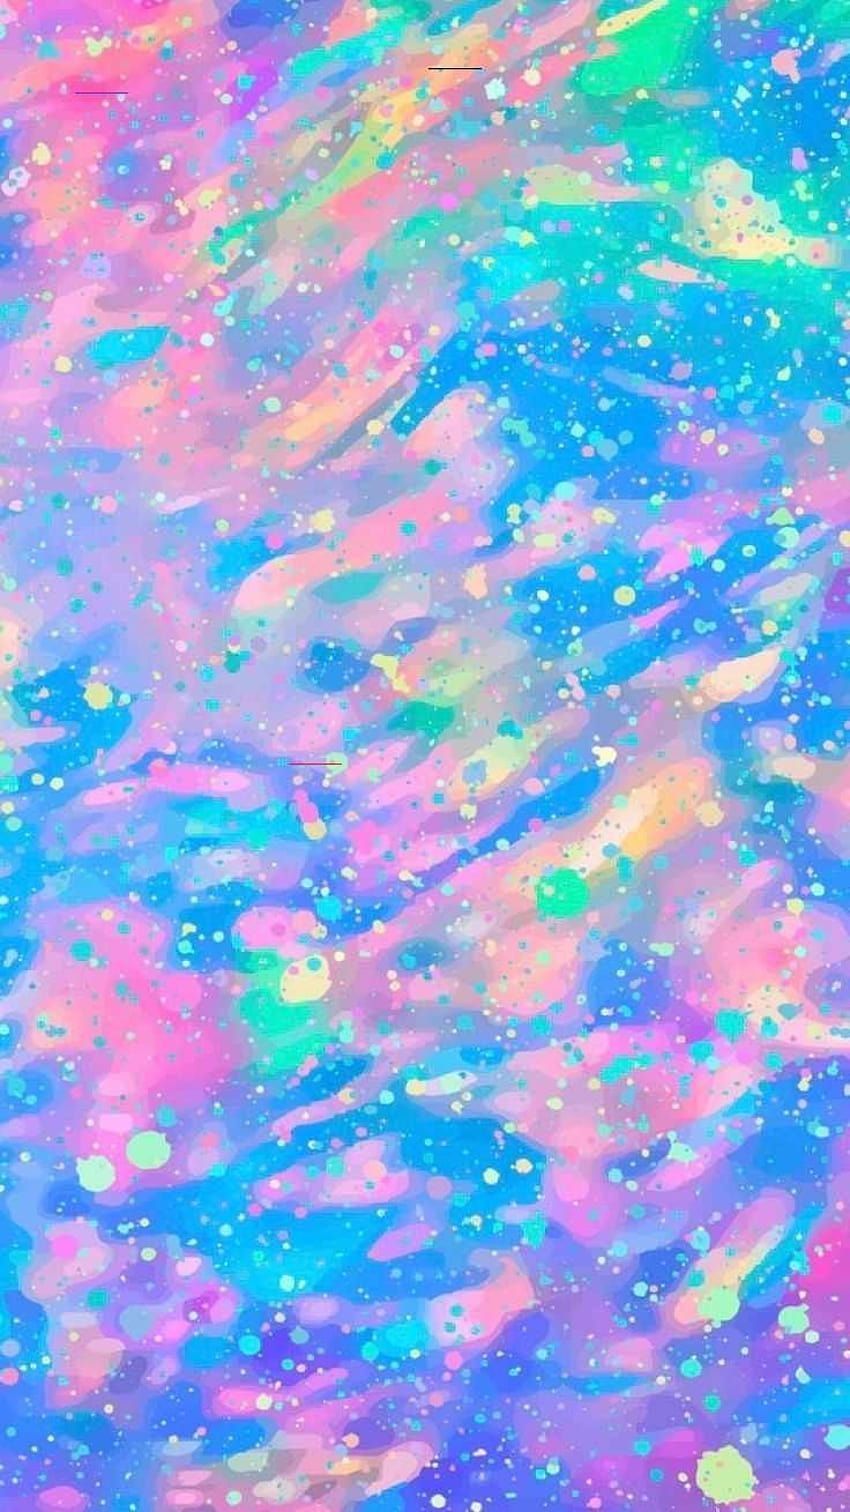 Rainbow glitter wallpaper, abstract art, download, background, free - Iridescent